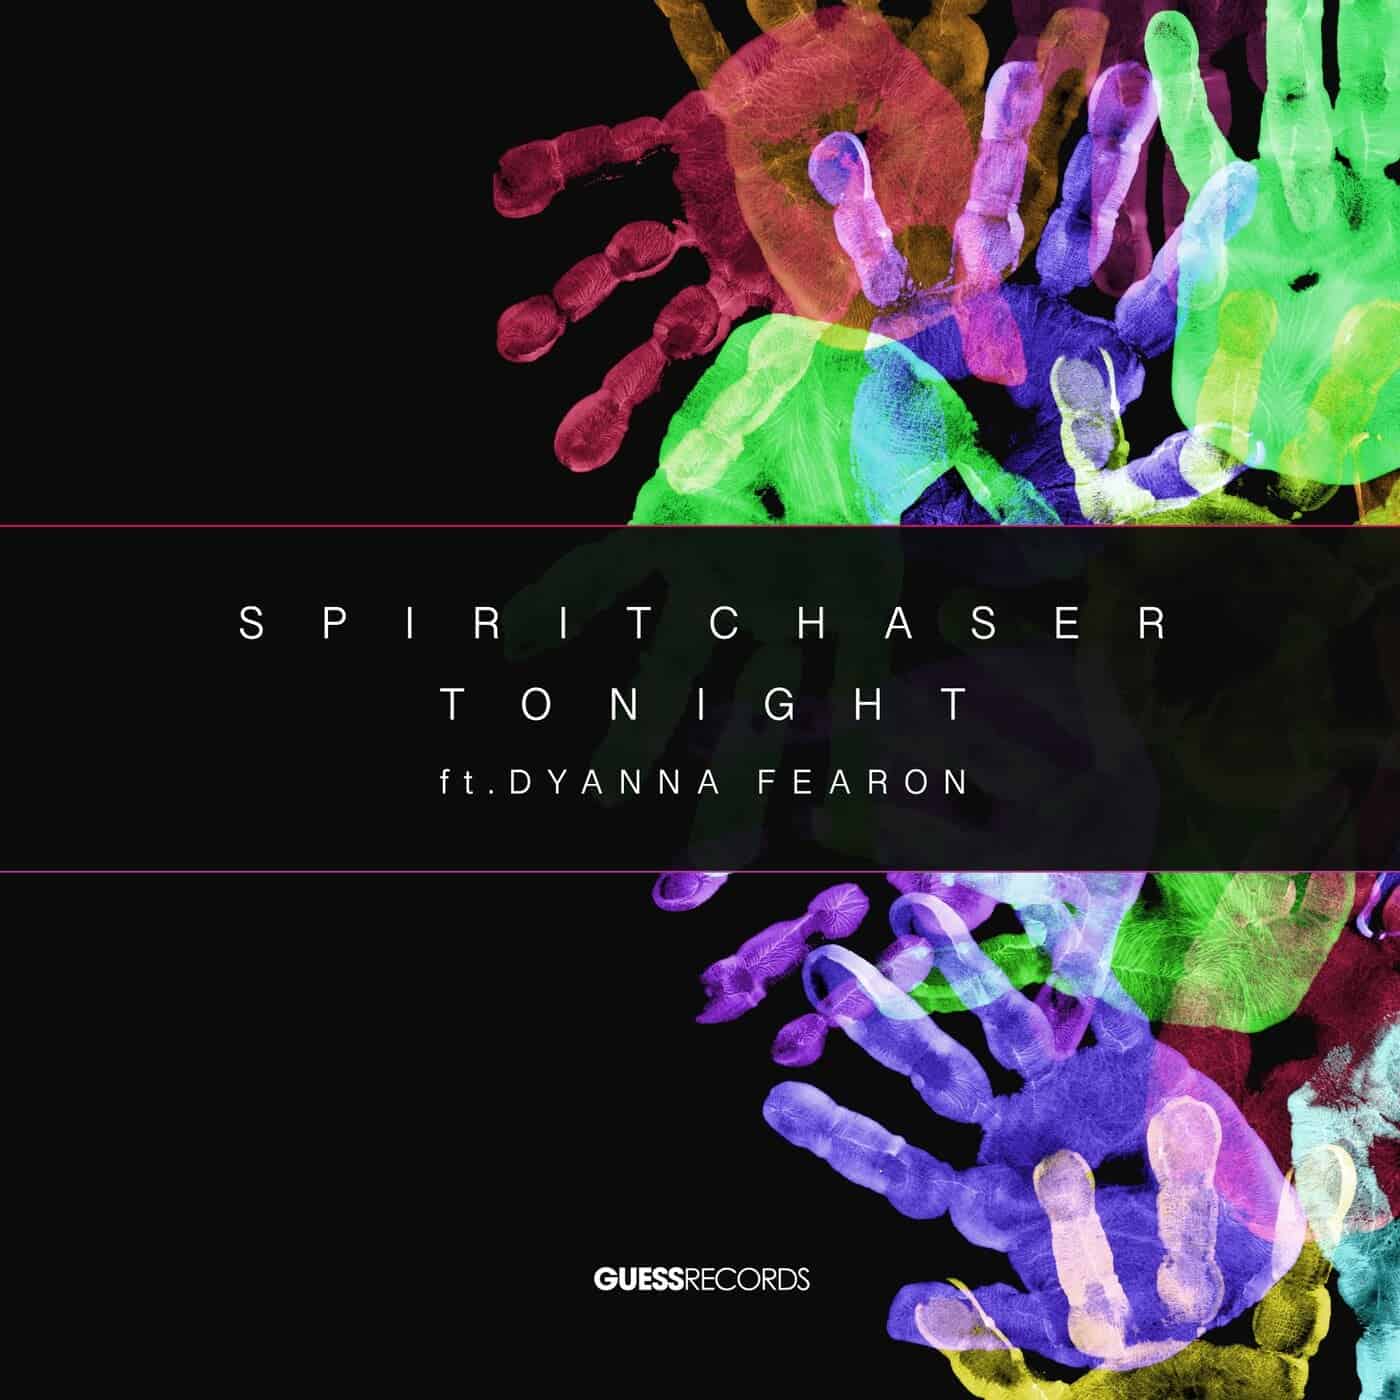 Download Spiritchaser, Dyanna Fearon - Tonight on Electrobuzz